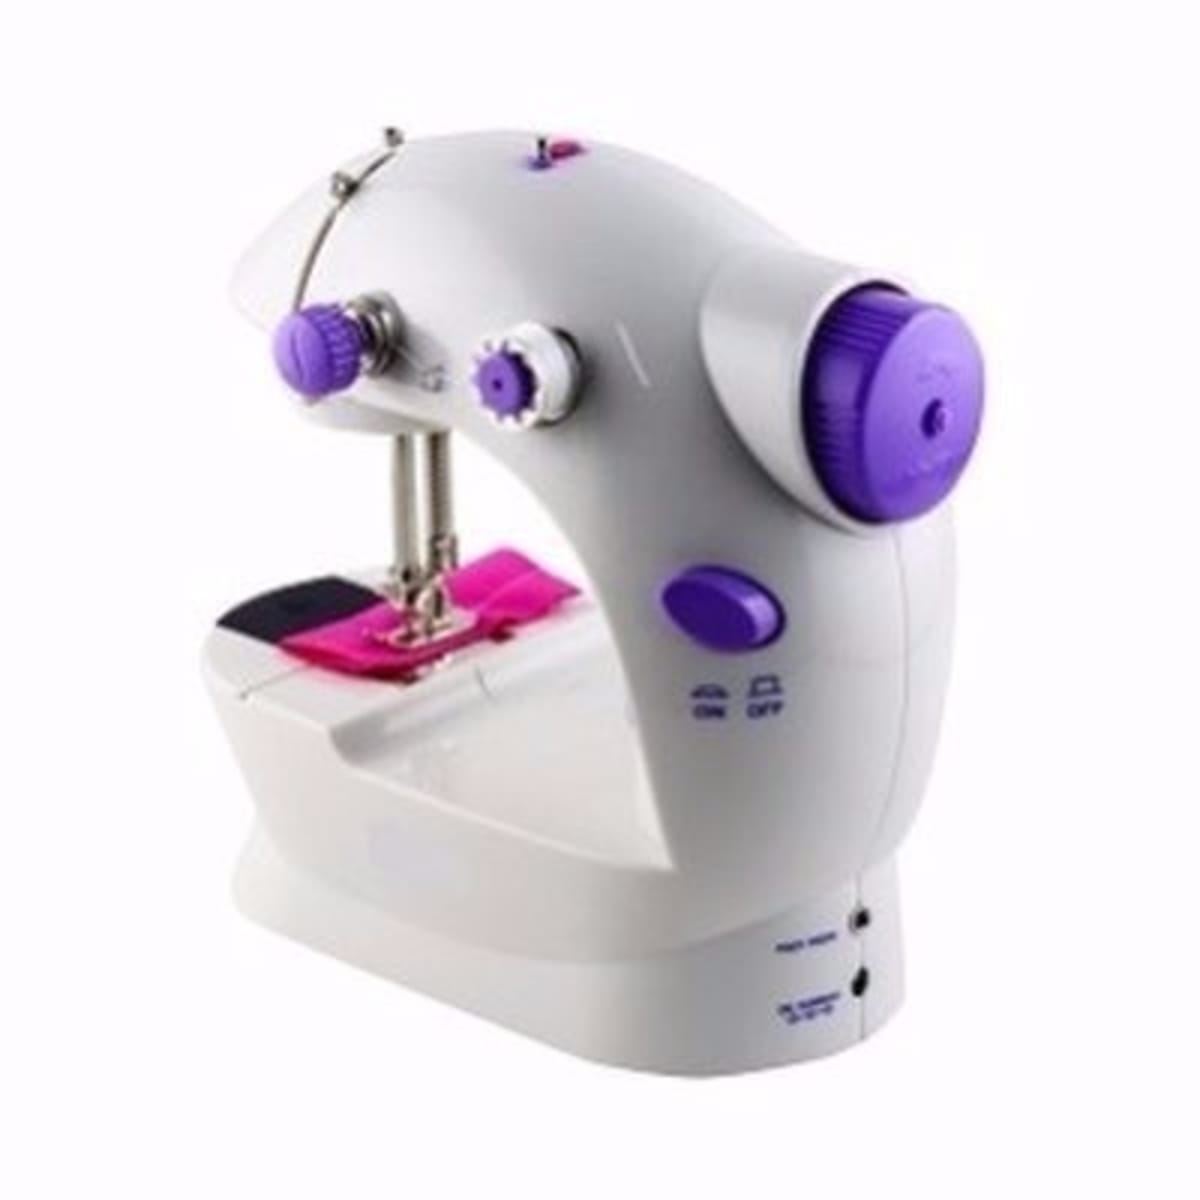 Mini Sewing Machines  Konga Online Shopping